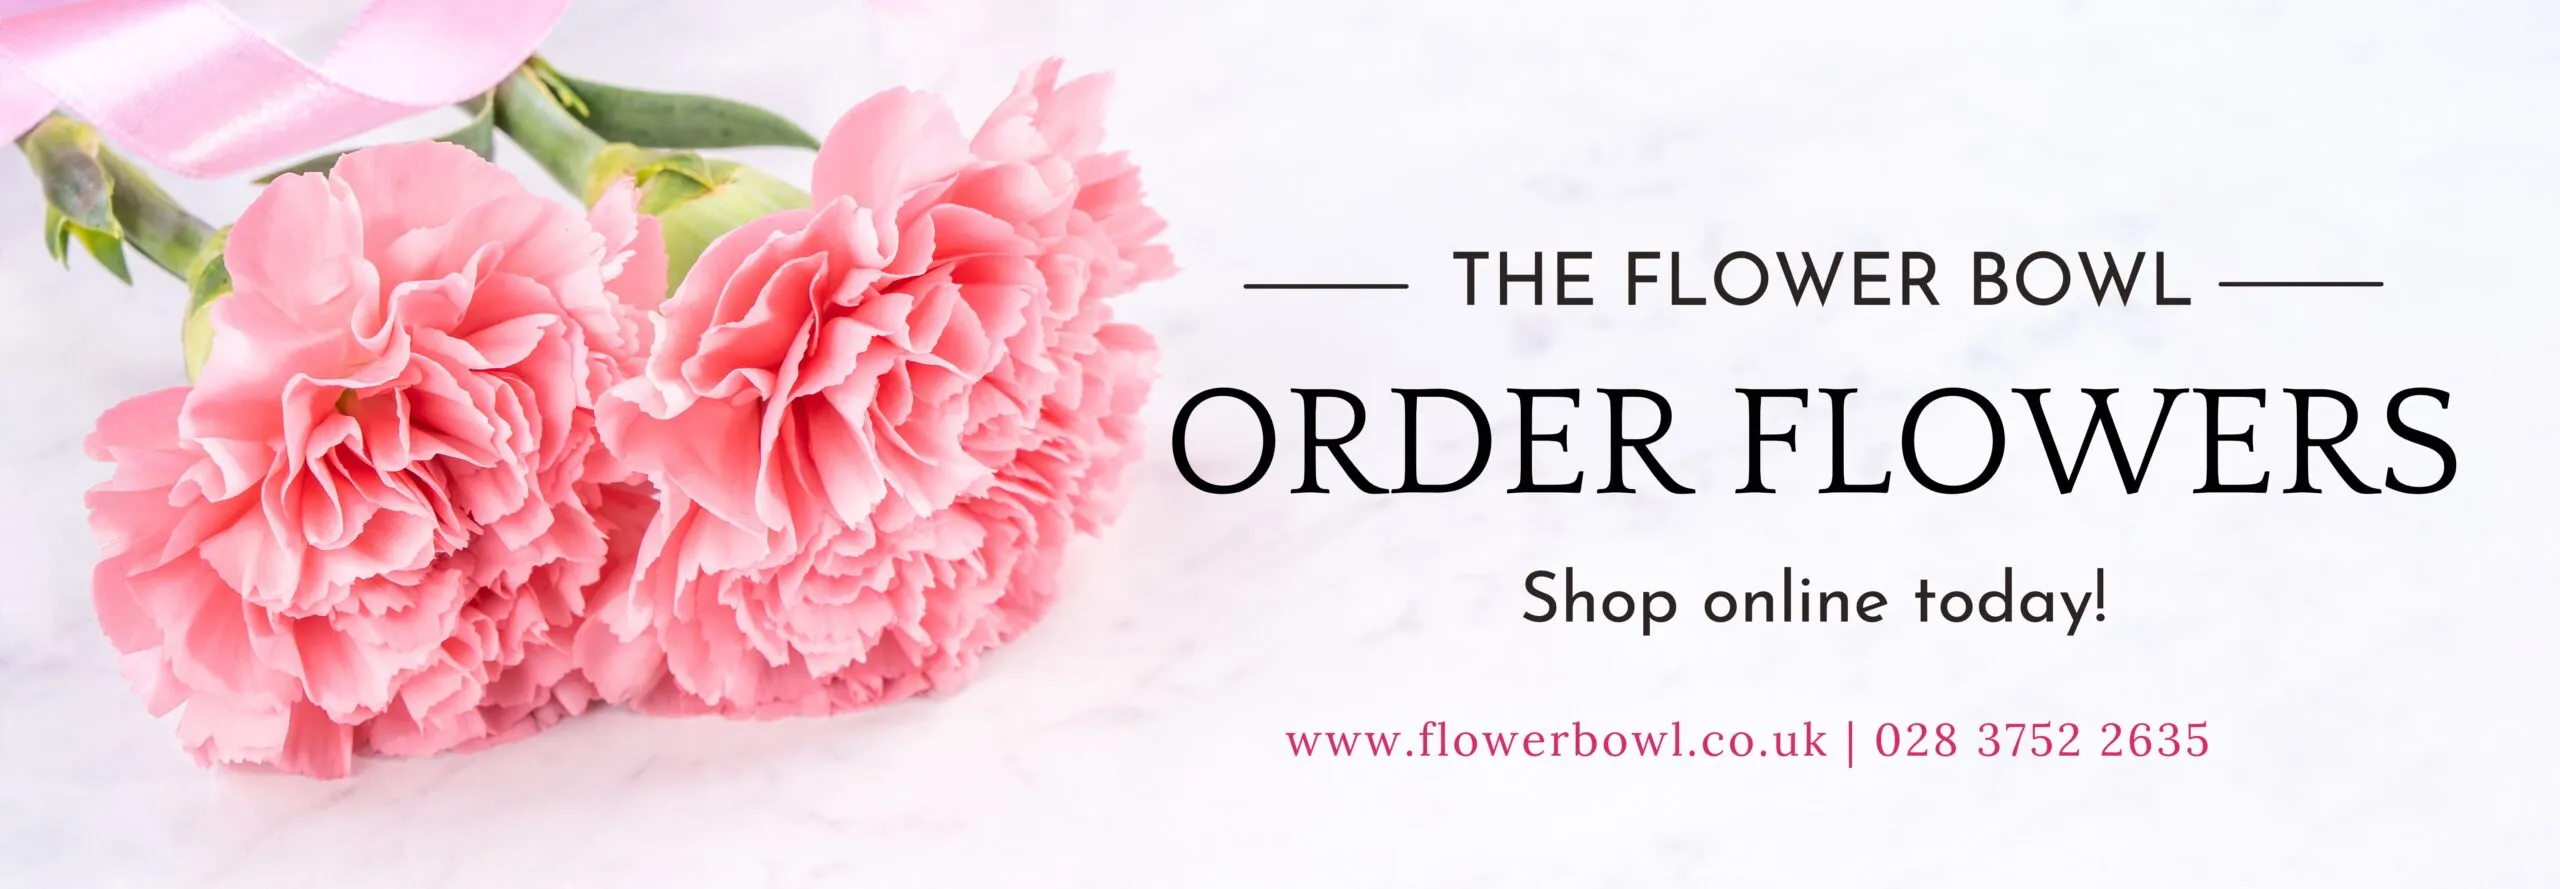 florists website - banners (59)